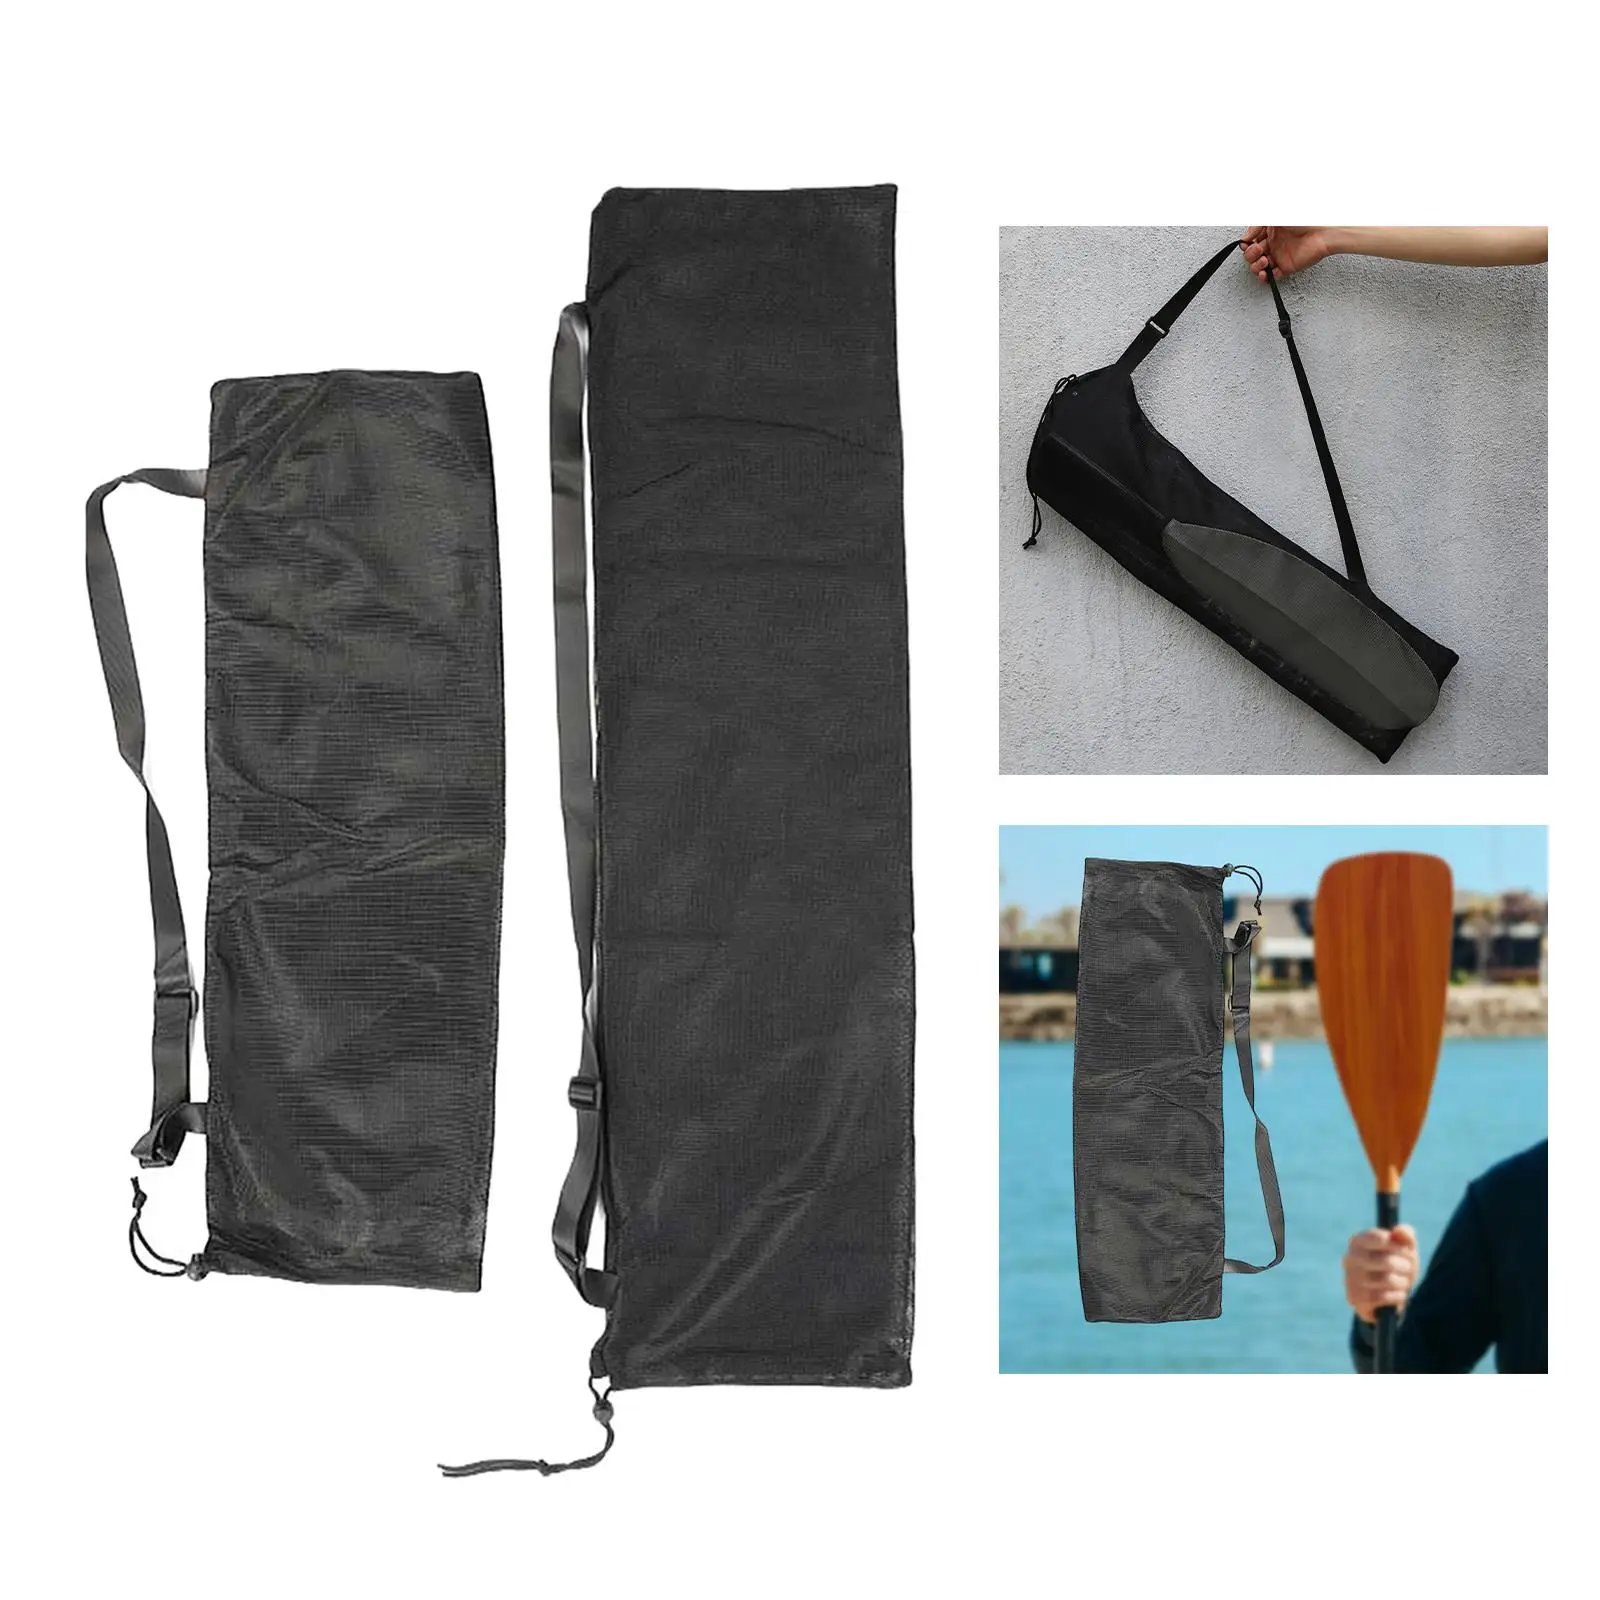 Portable Kayak Paddle Bag with Shoulder Strap Paddle Storage Bag Tote for Surfing Surfboarding Canoe Inflatable Boats Kayaking